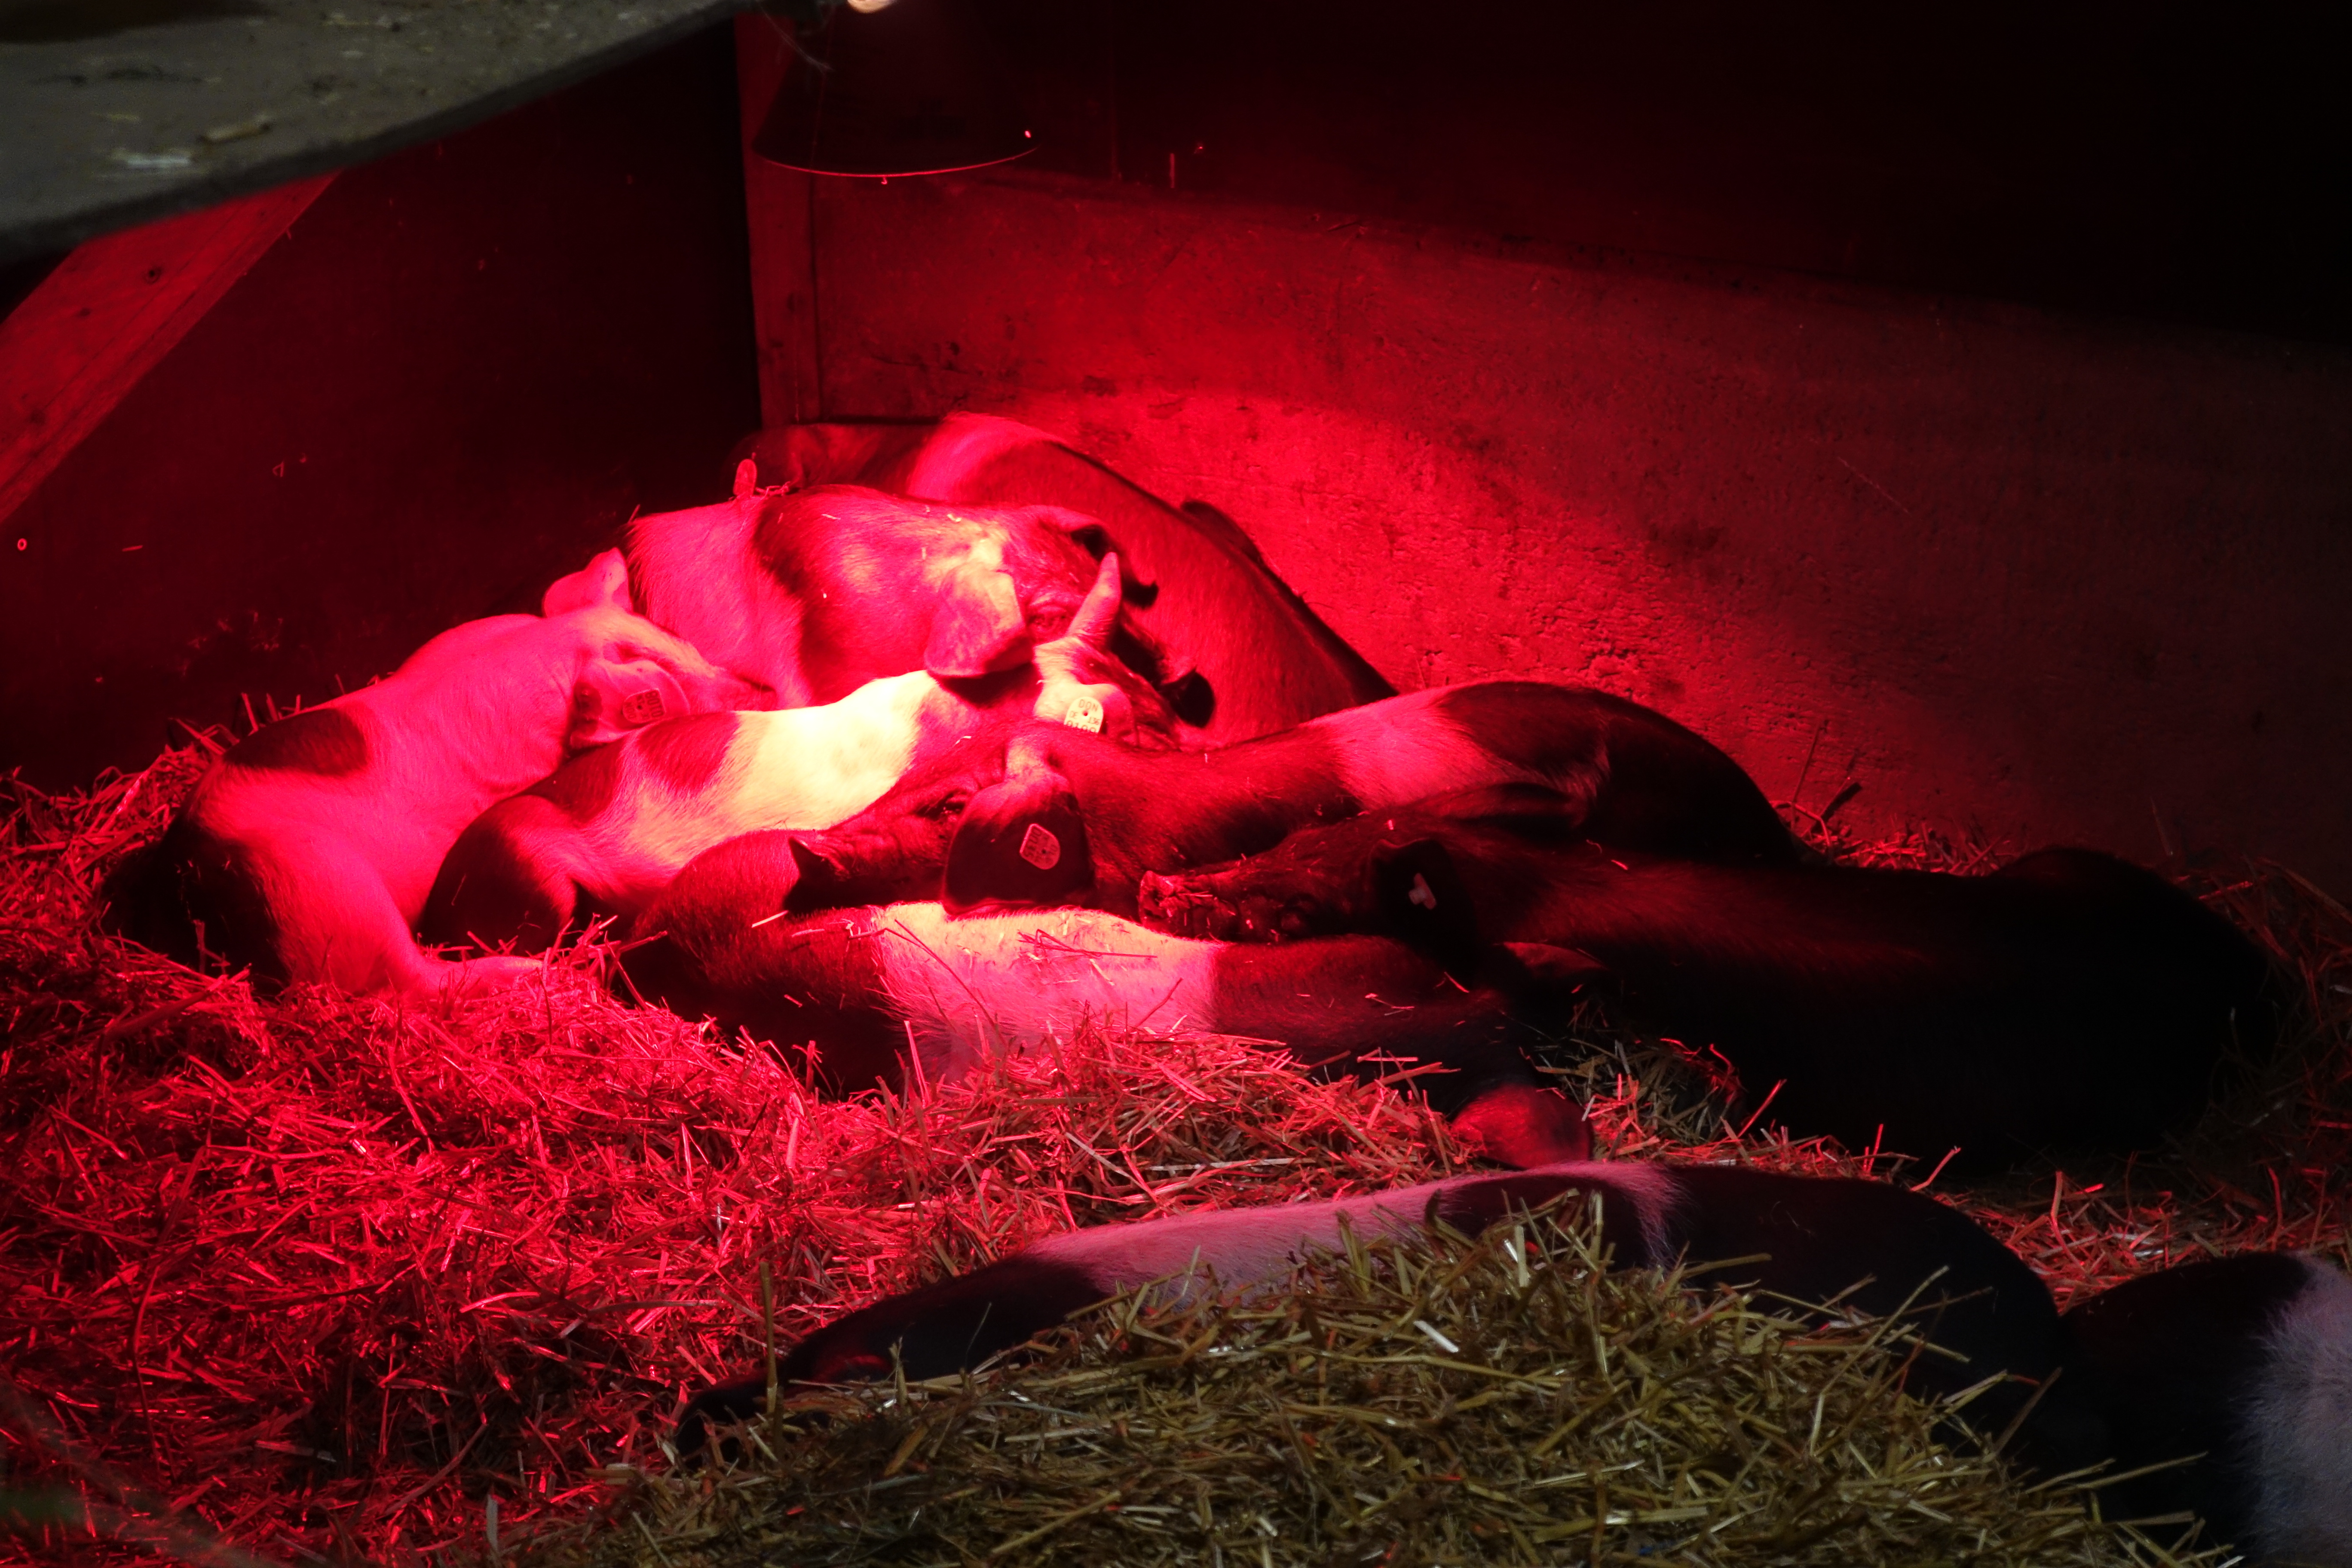 piglets huddled under a heat lamp